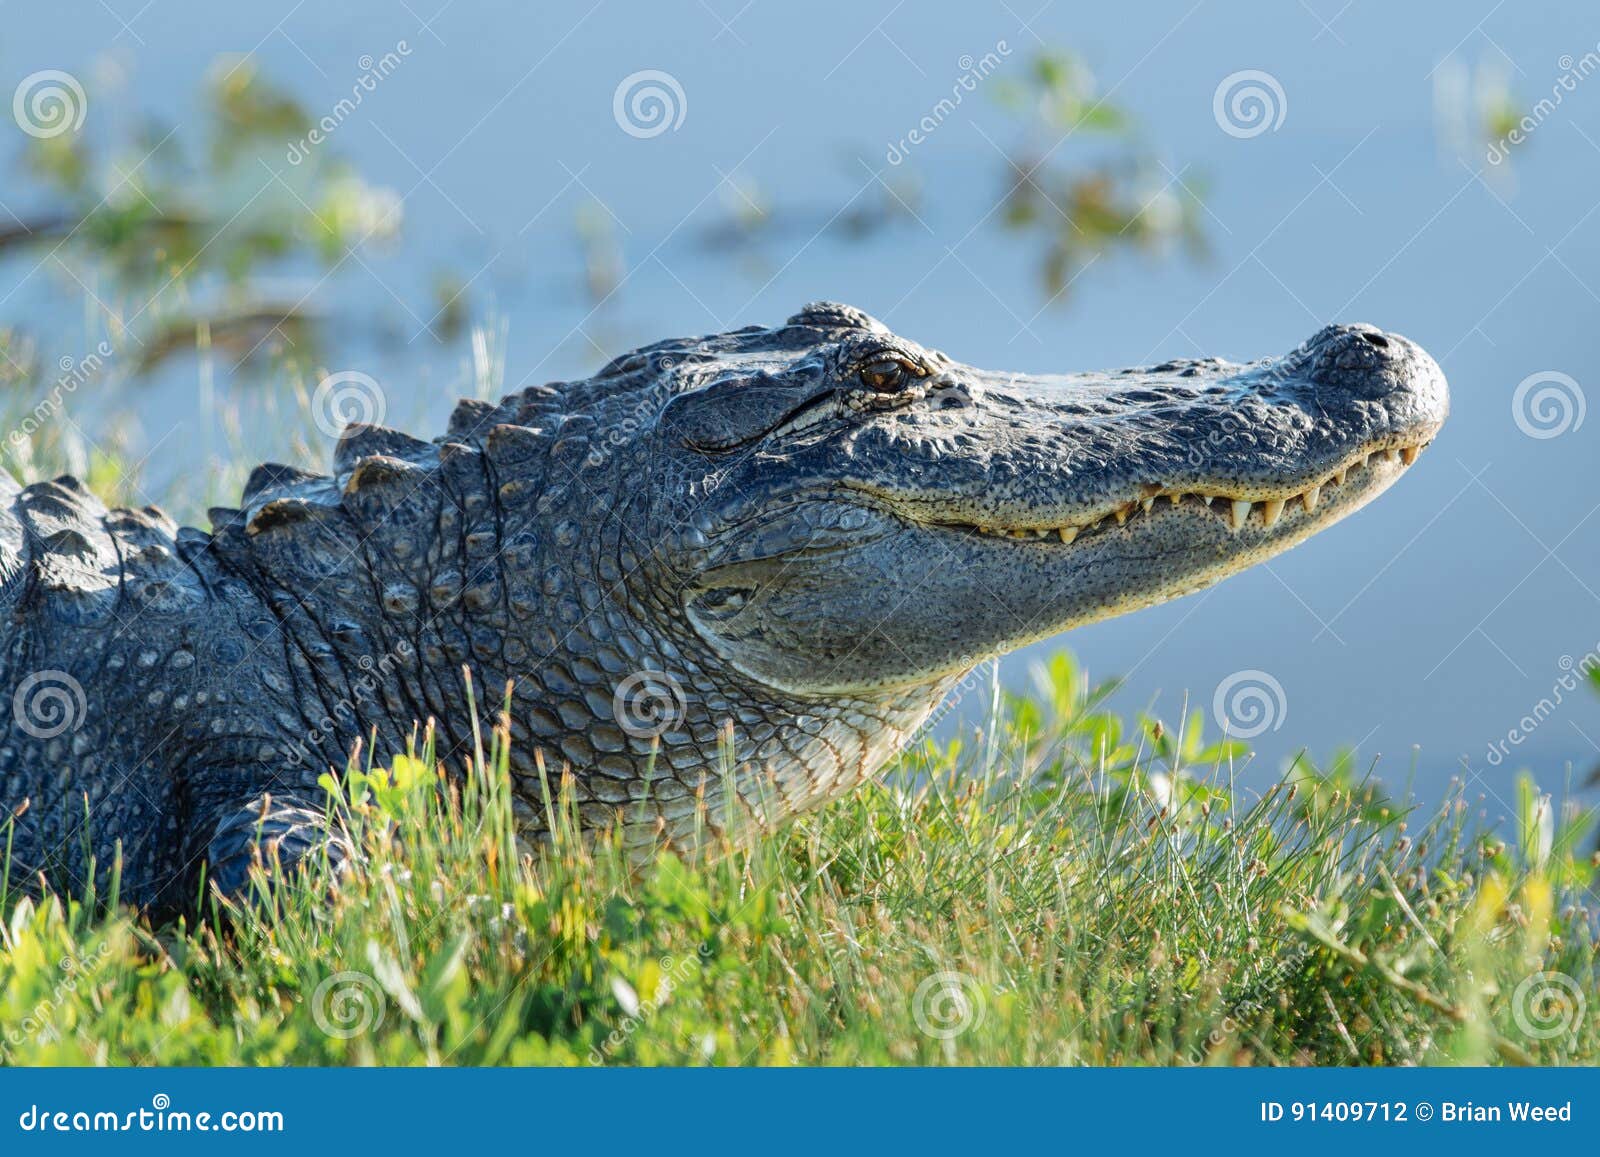 toothy alligator